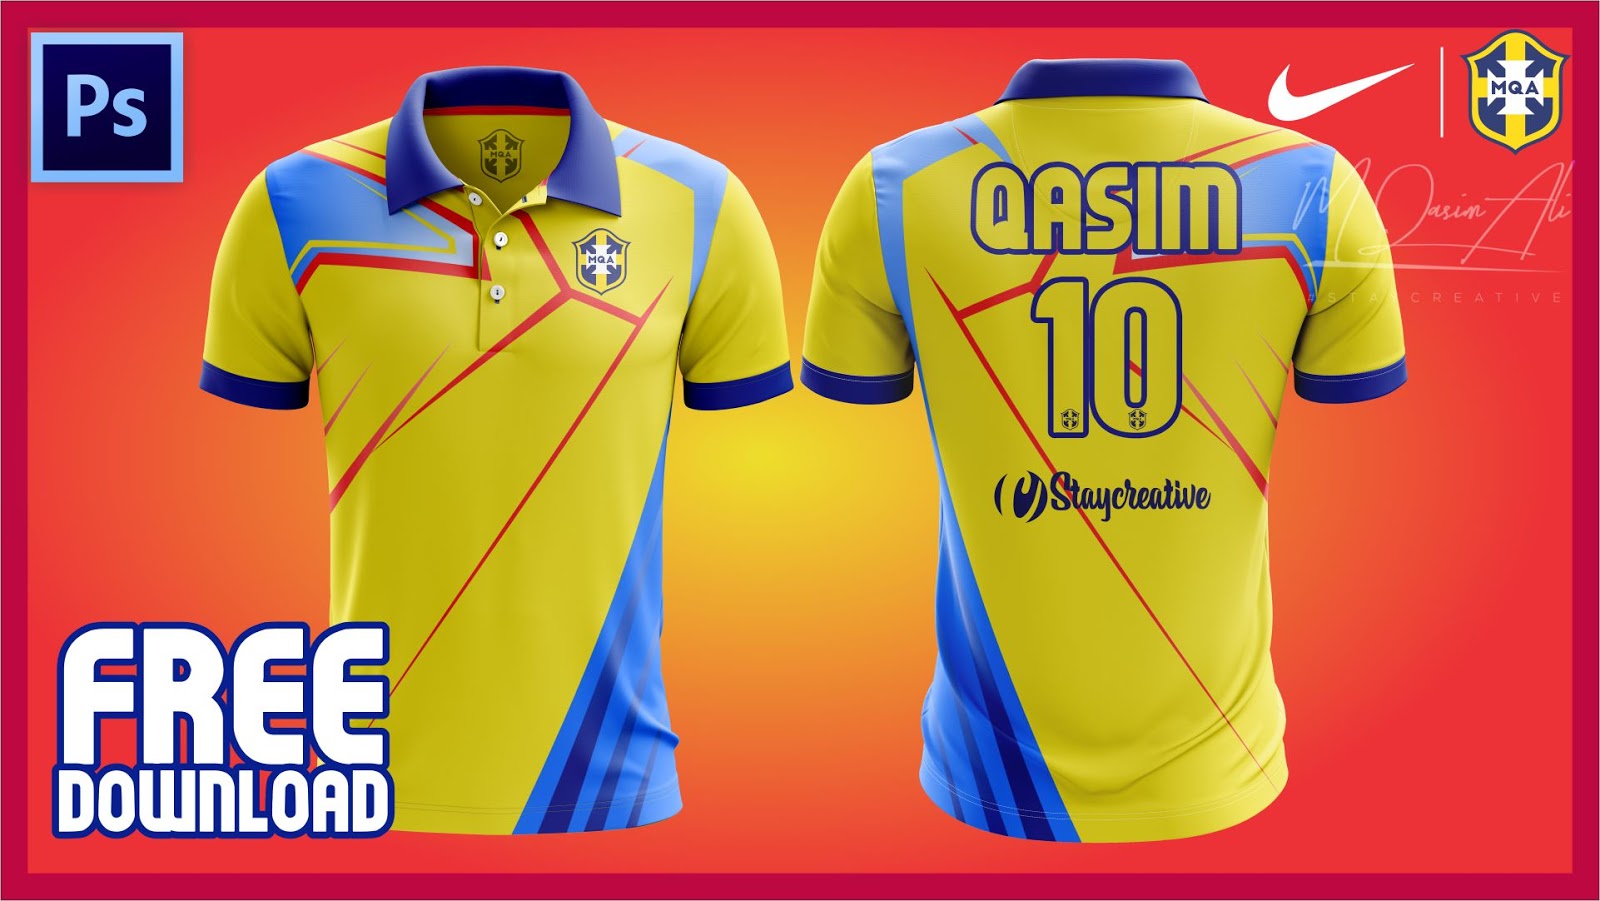 Download Epic Cricket Shirt Design Tutorial + Free Yellow image PSD ...